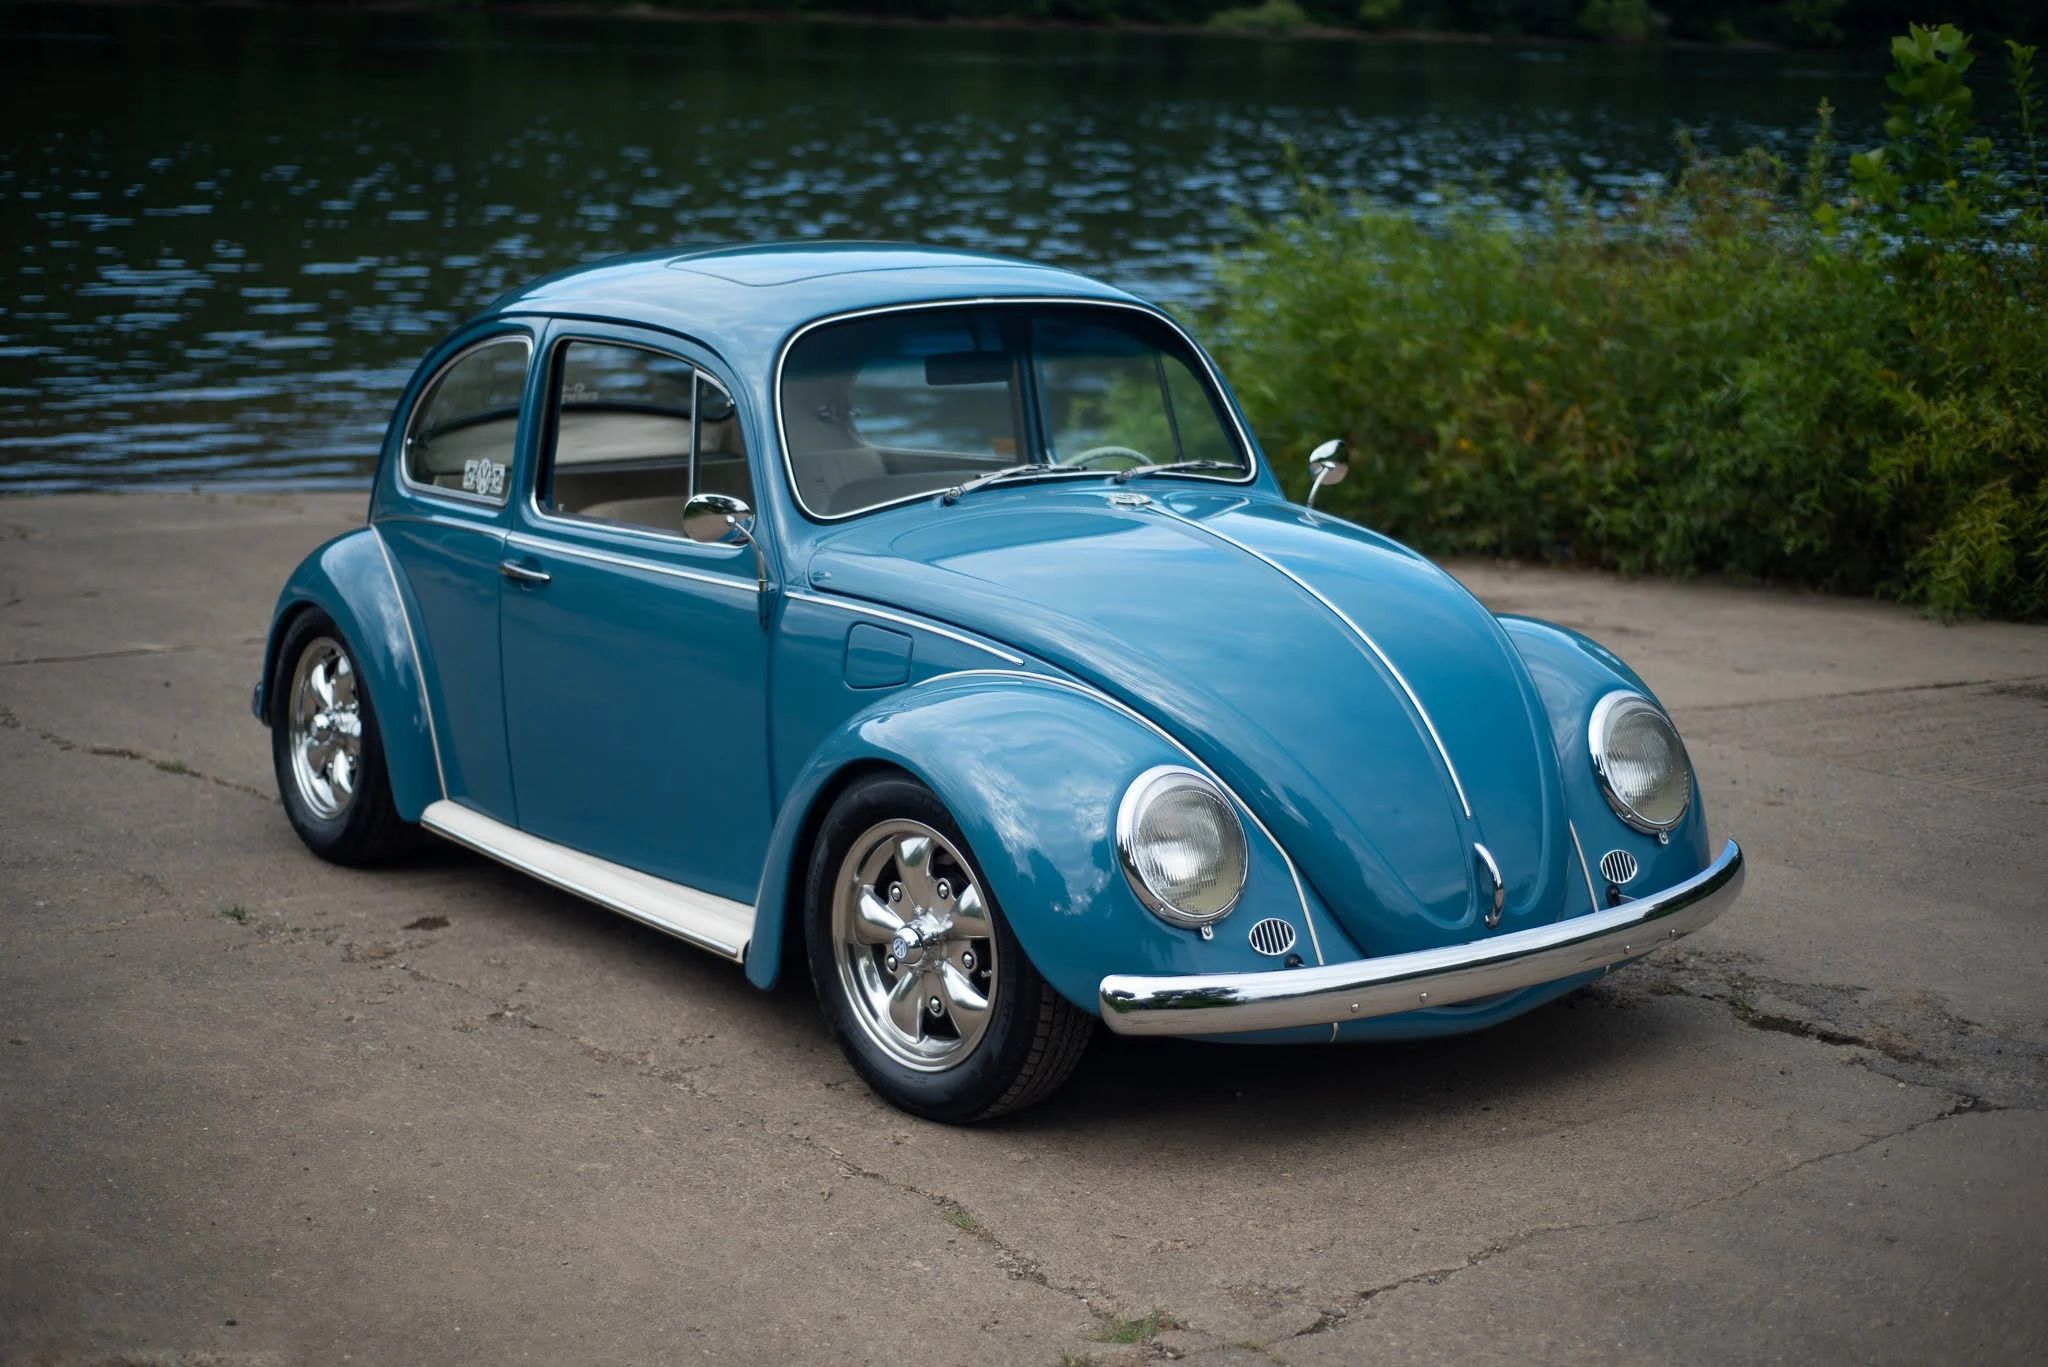 VW Beetle azul de 1970 estacionado